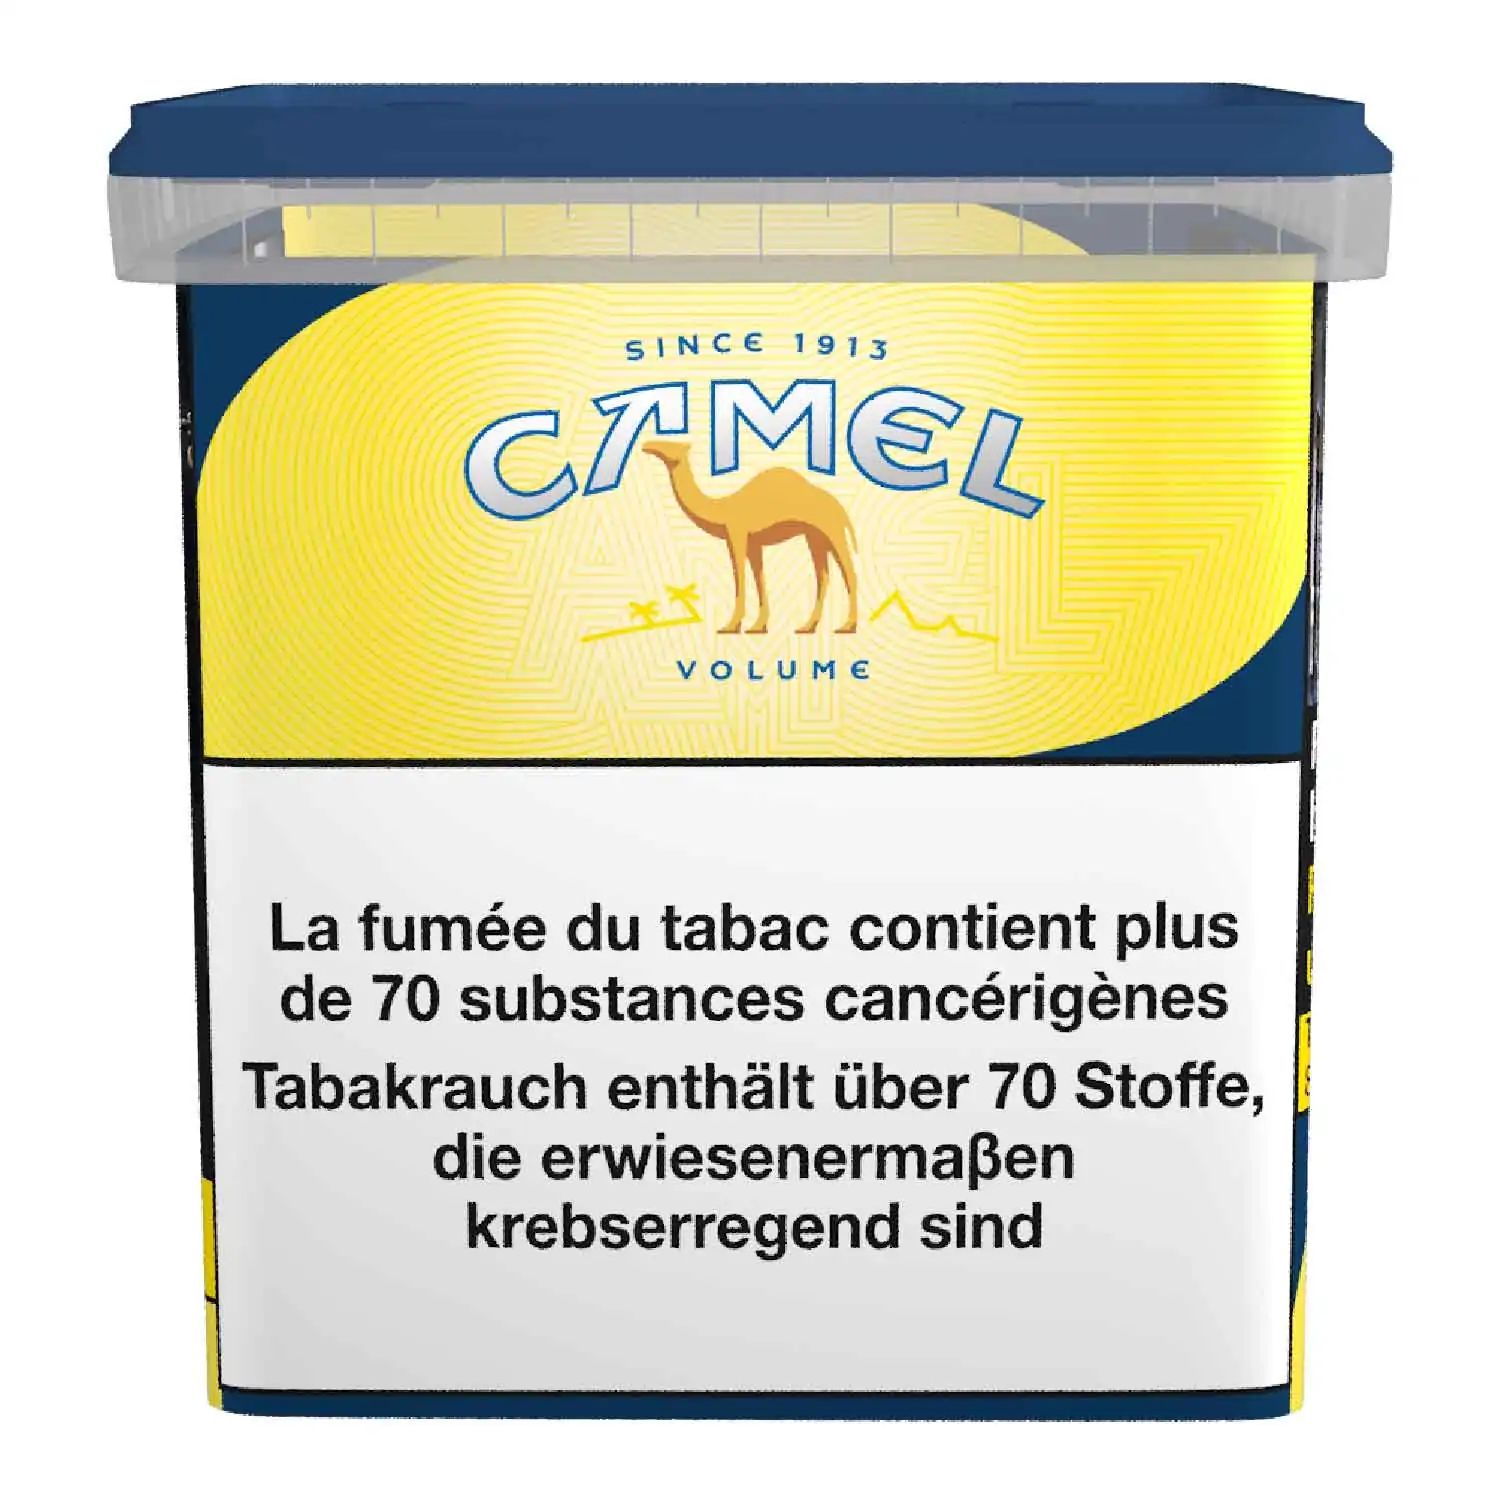 Camel volume yellow 250g - Buy at Real Tobacco